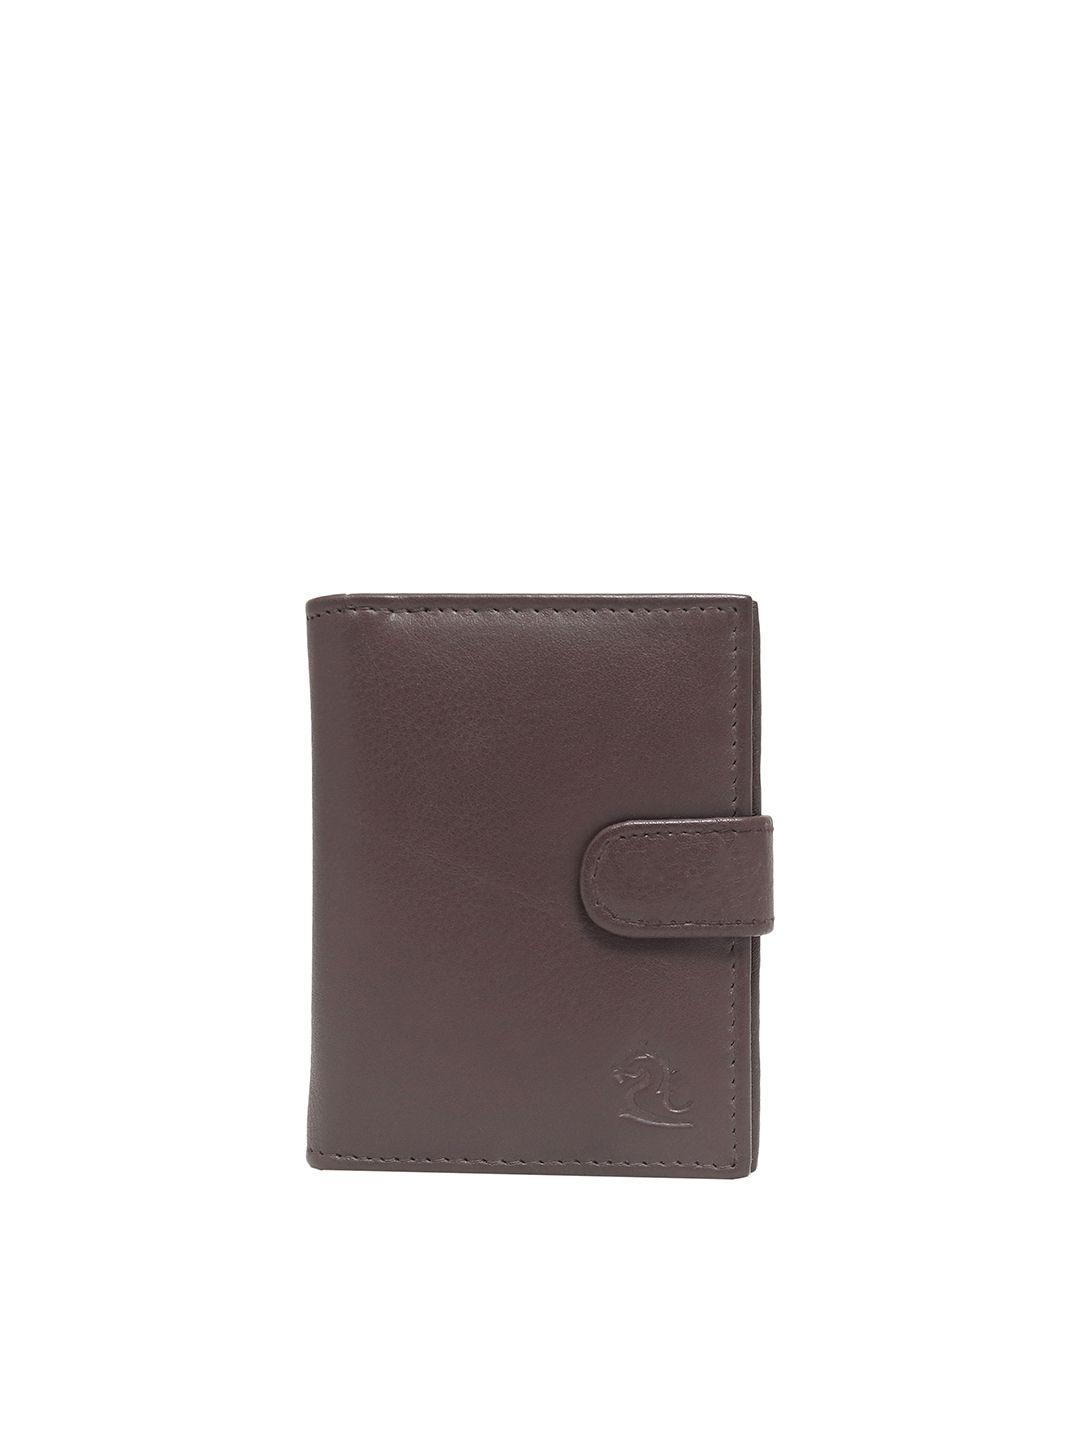 kara unisex tan leather card holder